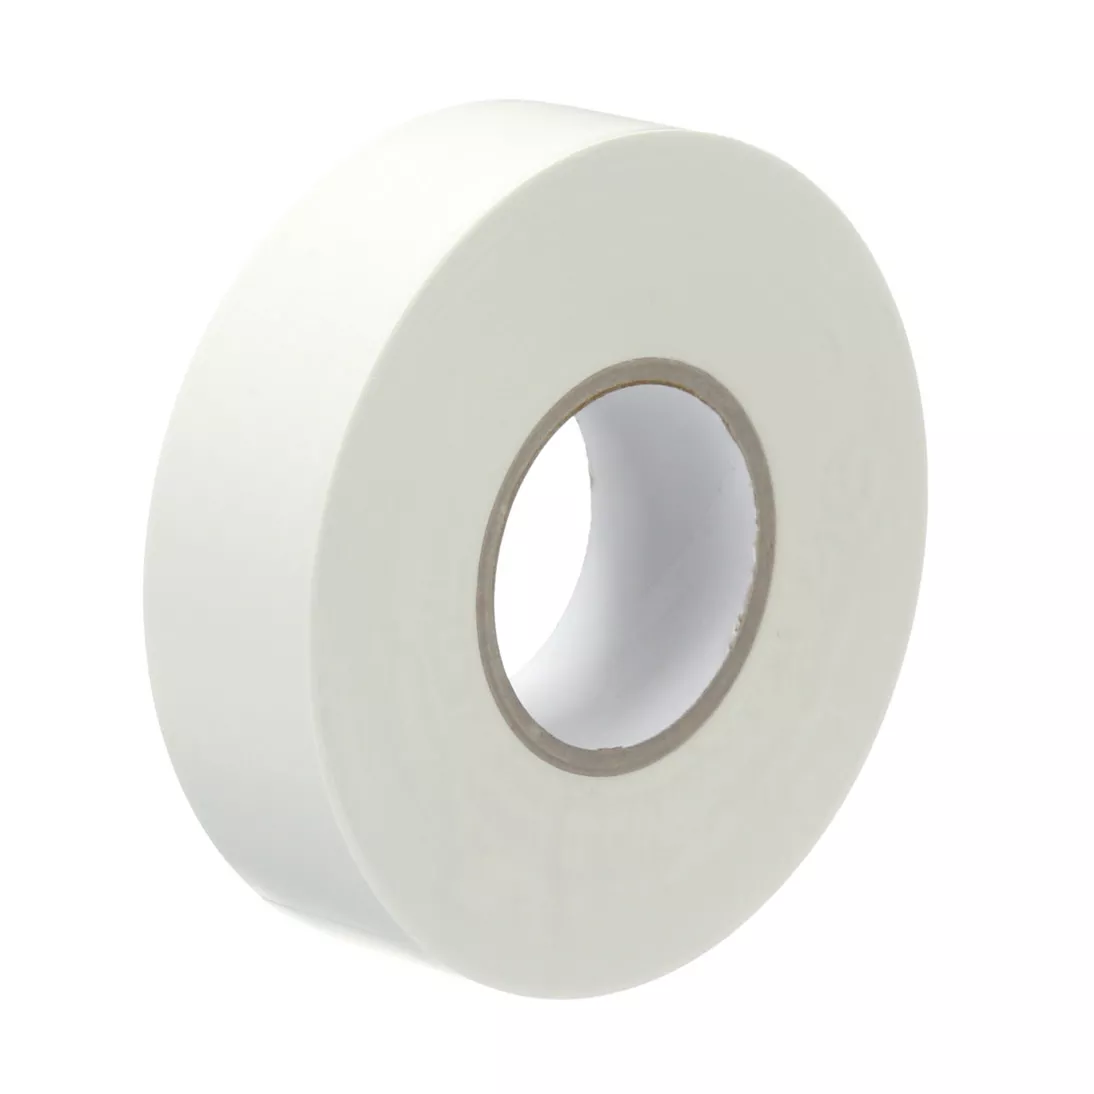 3M™ Selfwound PVC Tape 1506R, White , 1 in x 36 yd, 6 mil, 36 rolls per
case